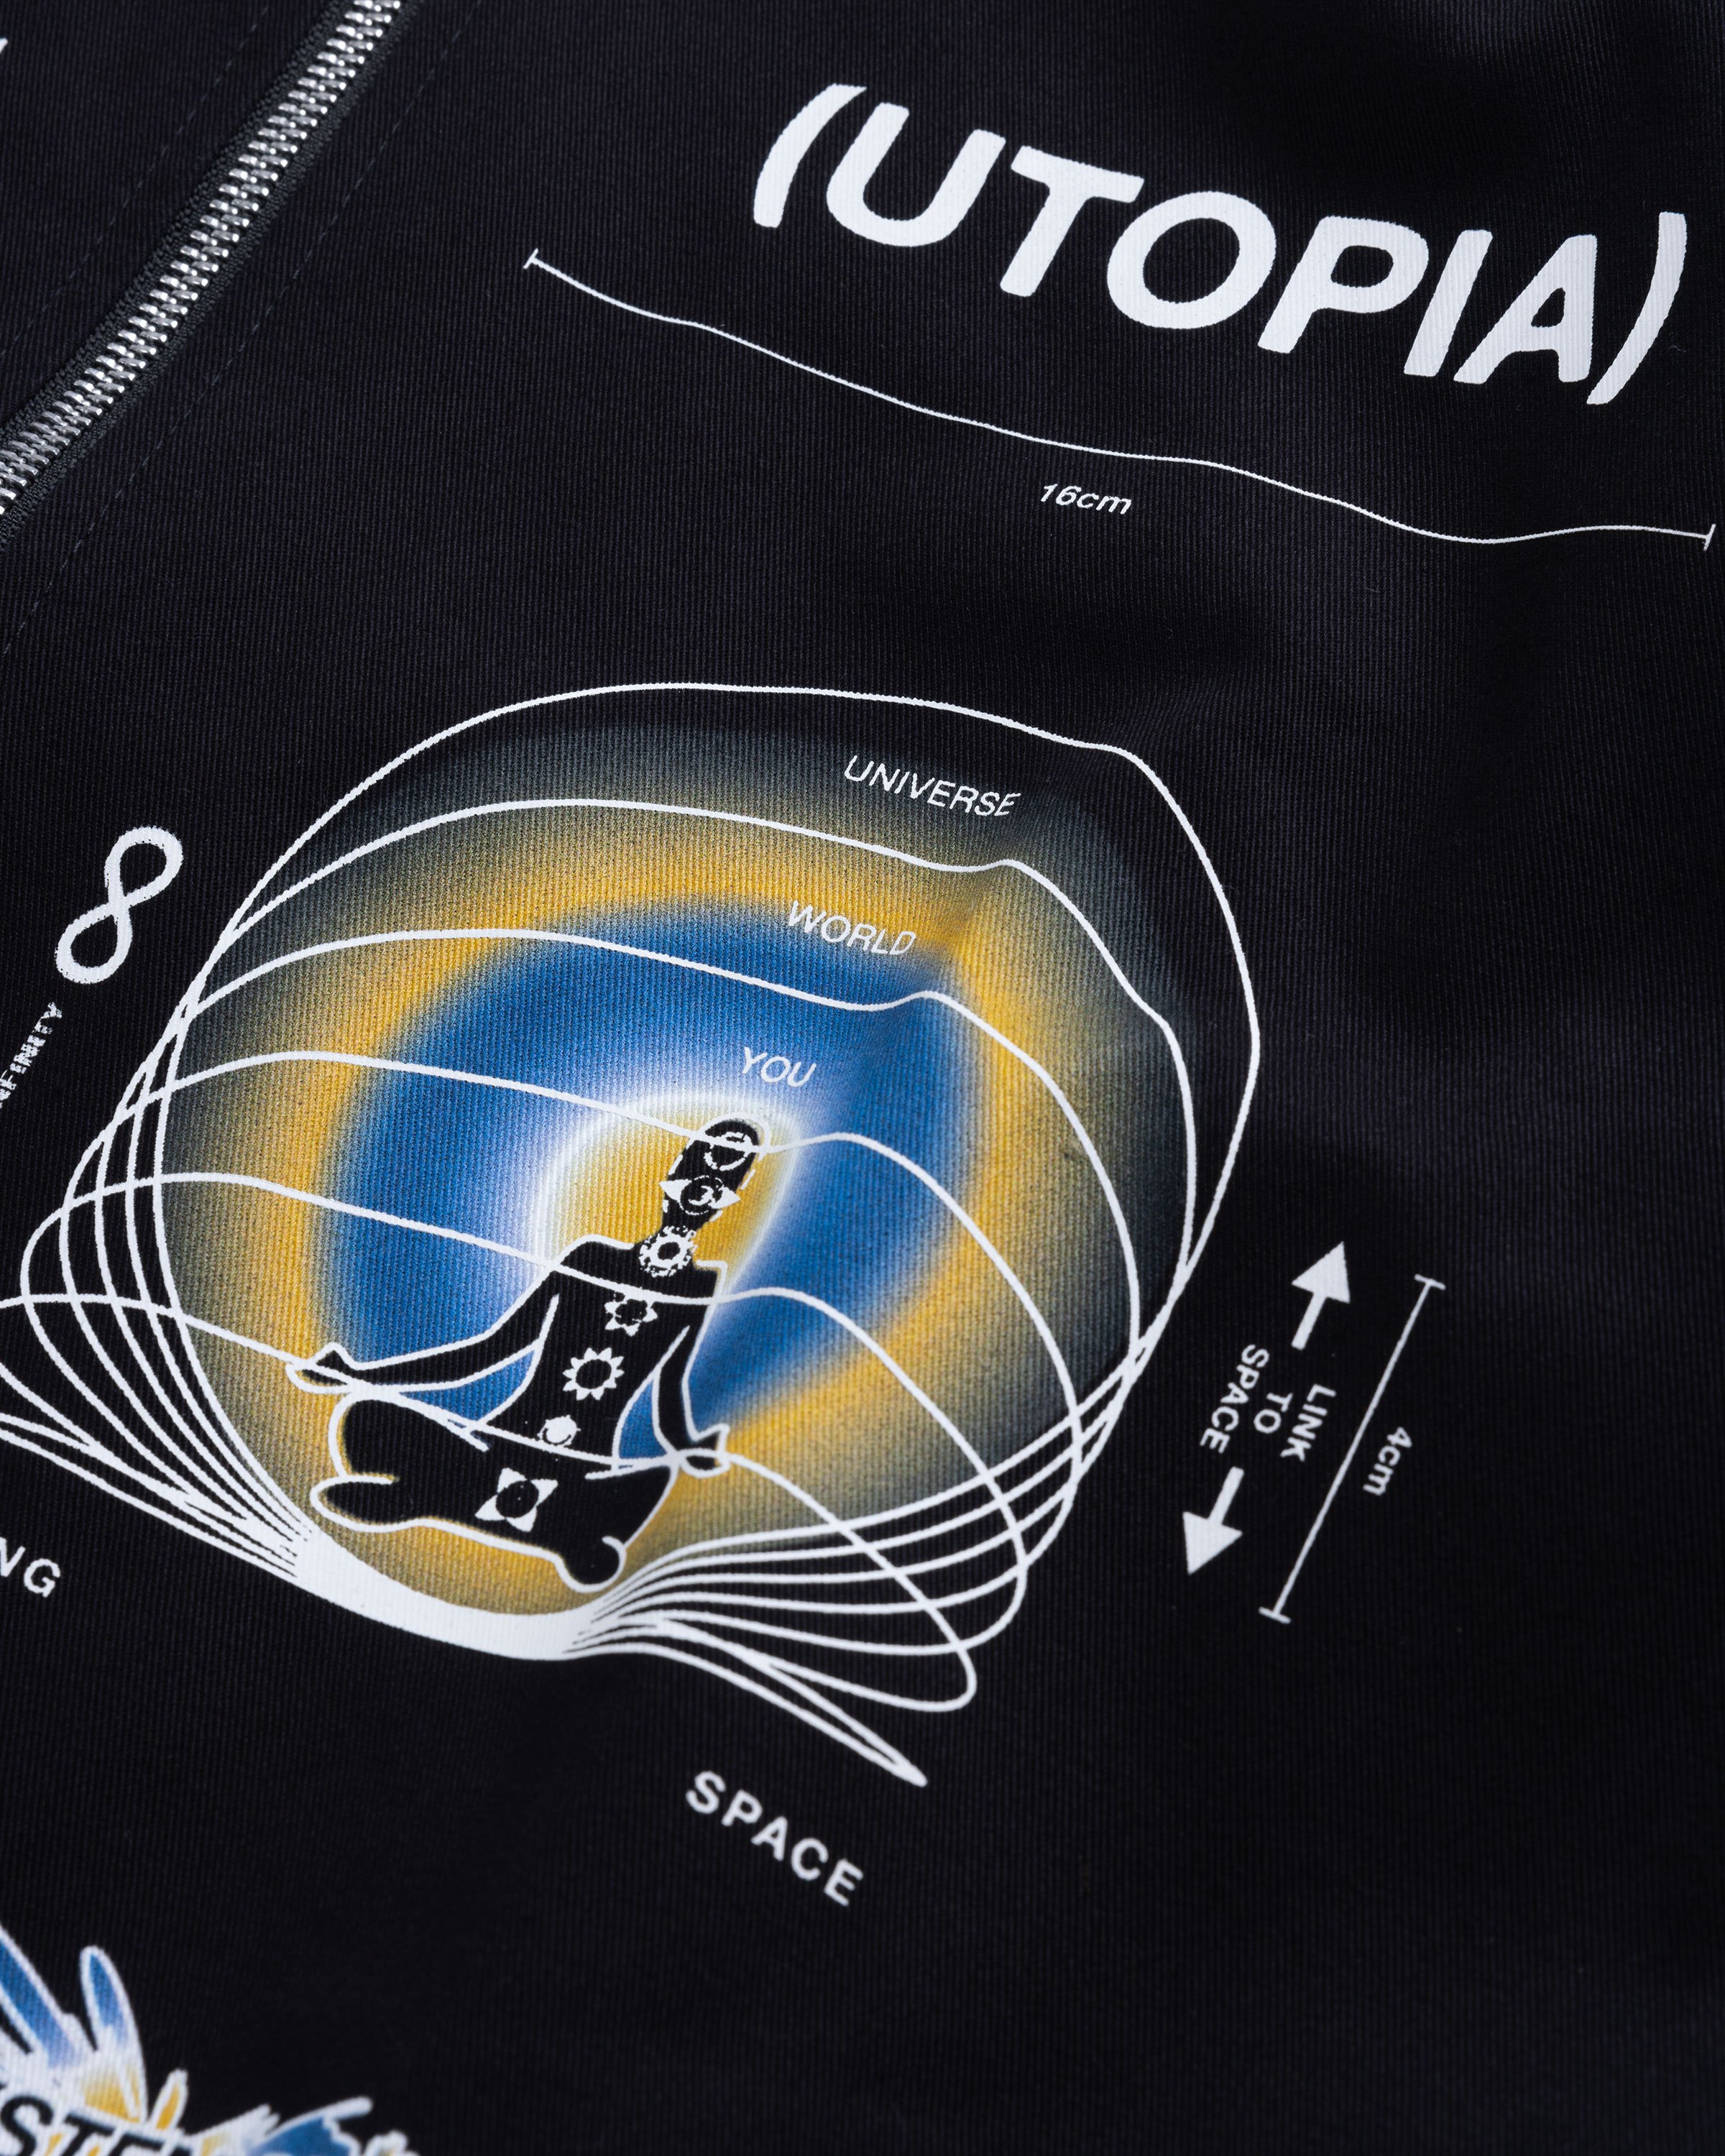 Space Available Studio - Utopia Work Jacket Black - Clothing - Black - Image 6